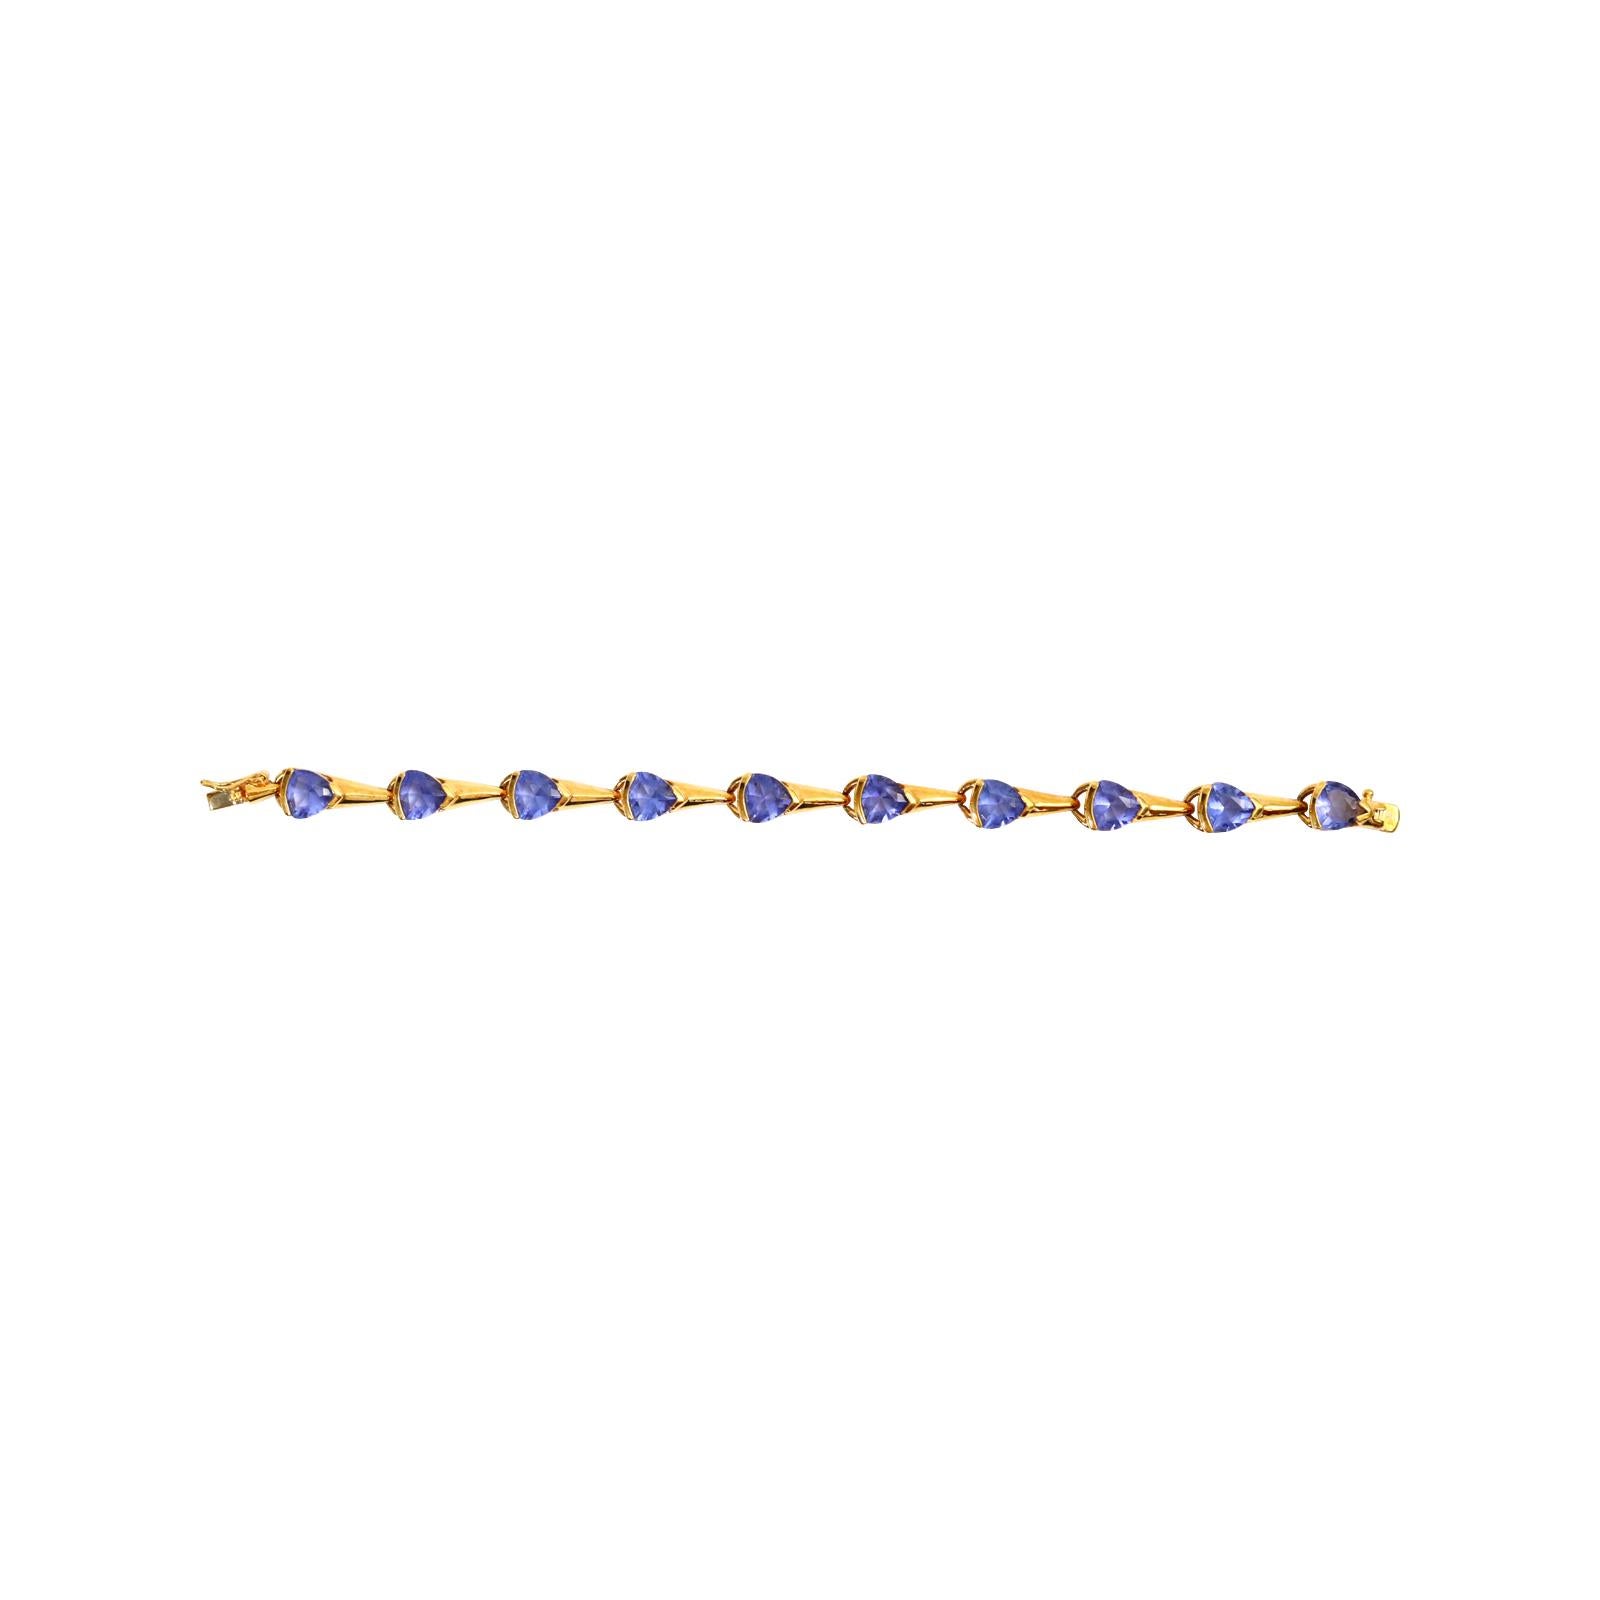 Vintage Sterling Gold Tone Link Bracelet with Blue Diamante Stones Circa 1990s For Sale 2